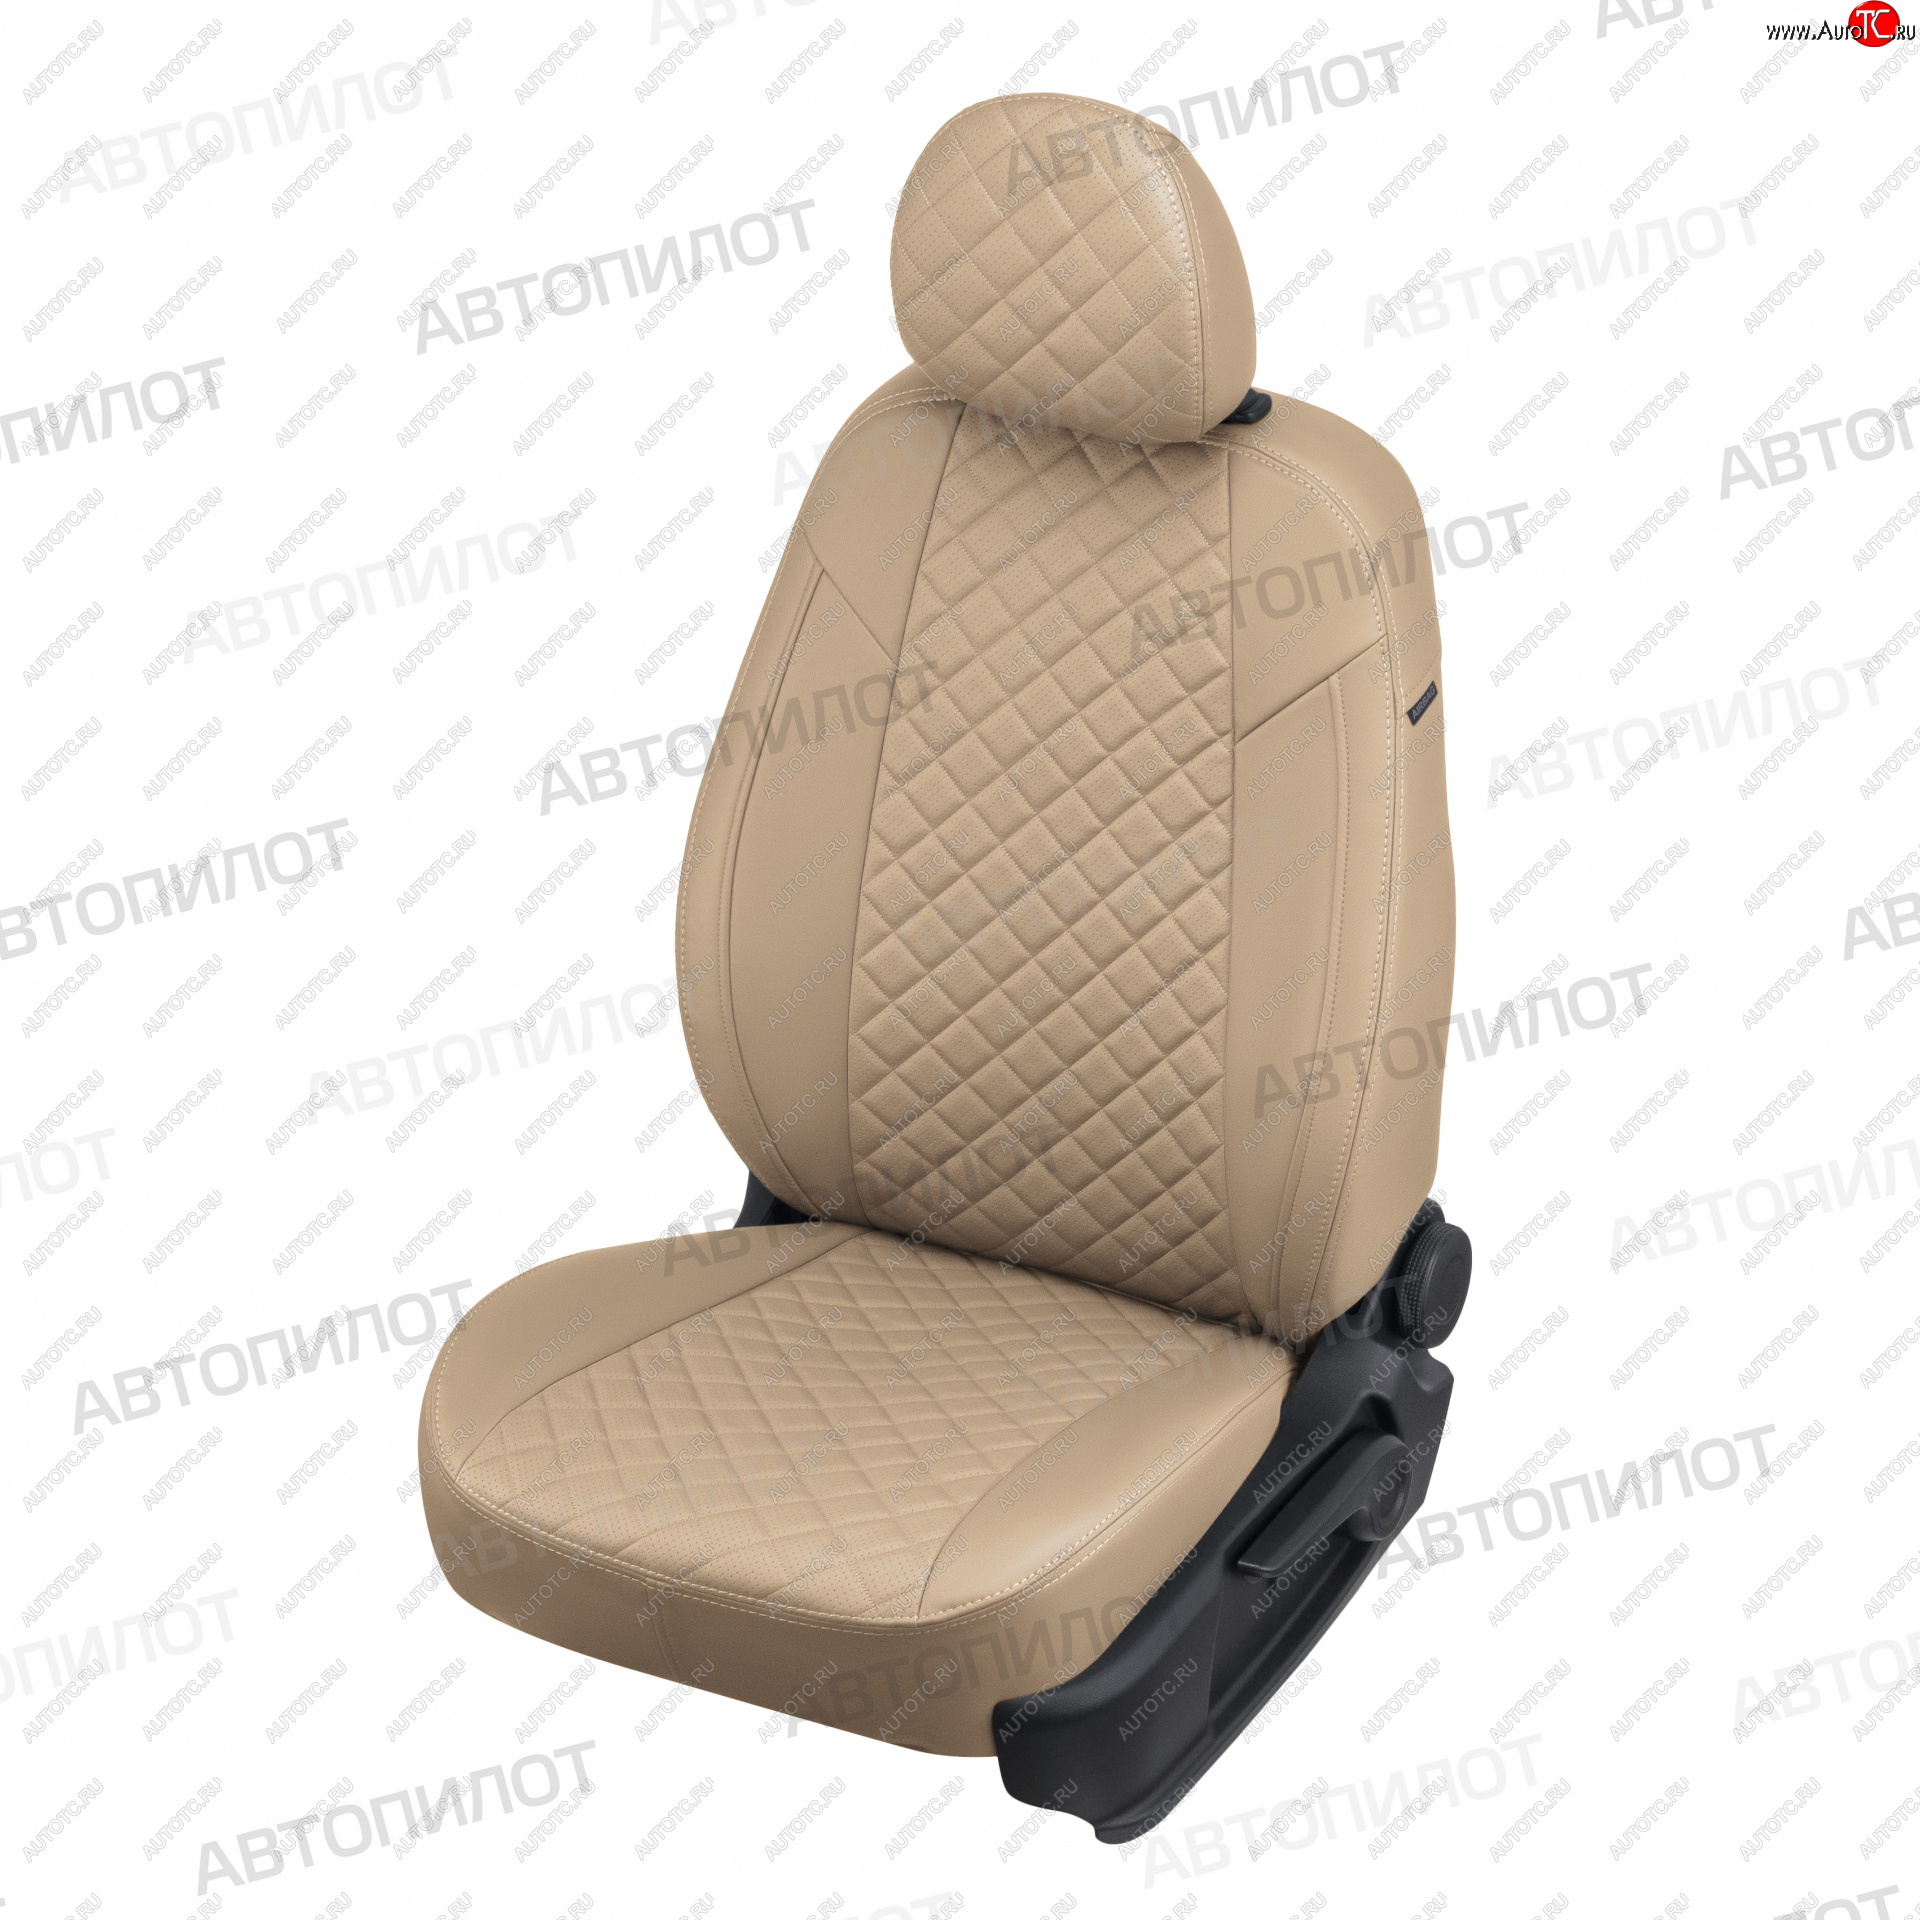 14 499 р. Чехлы сидений (5 мест, экокожа) Автопилот Ромб  Ford Galaxy  2 (2006-2015) (темно-бежевый)